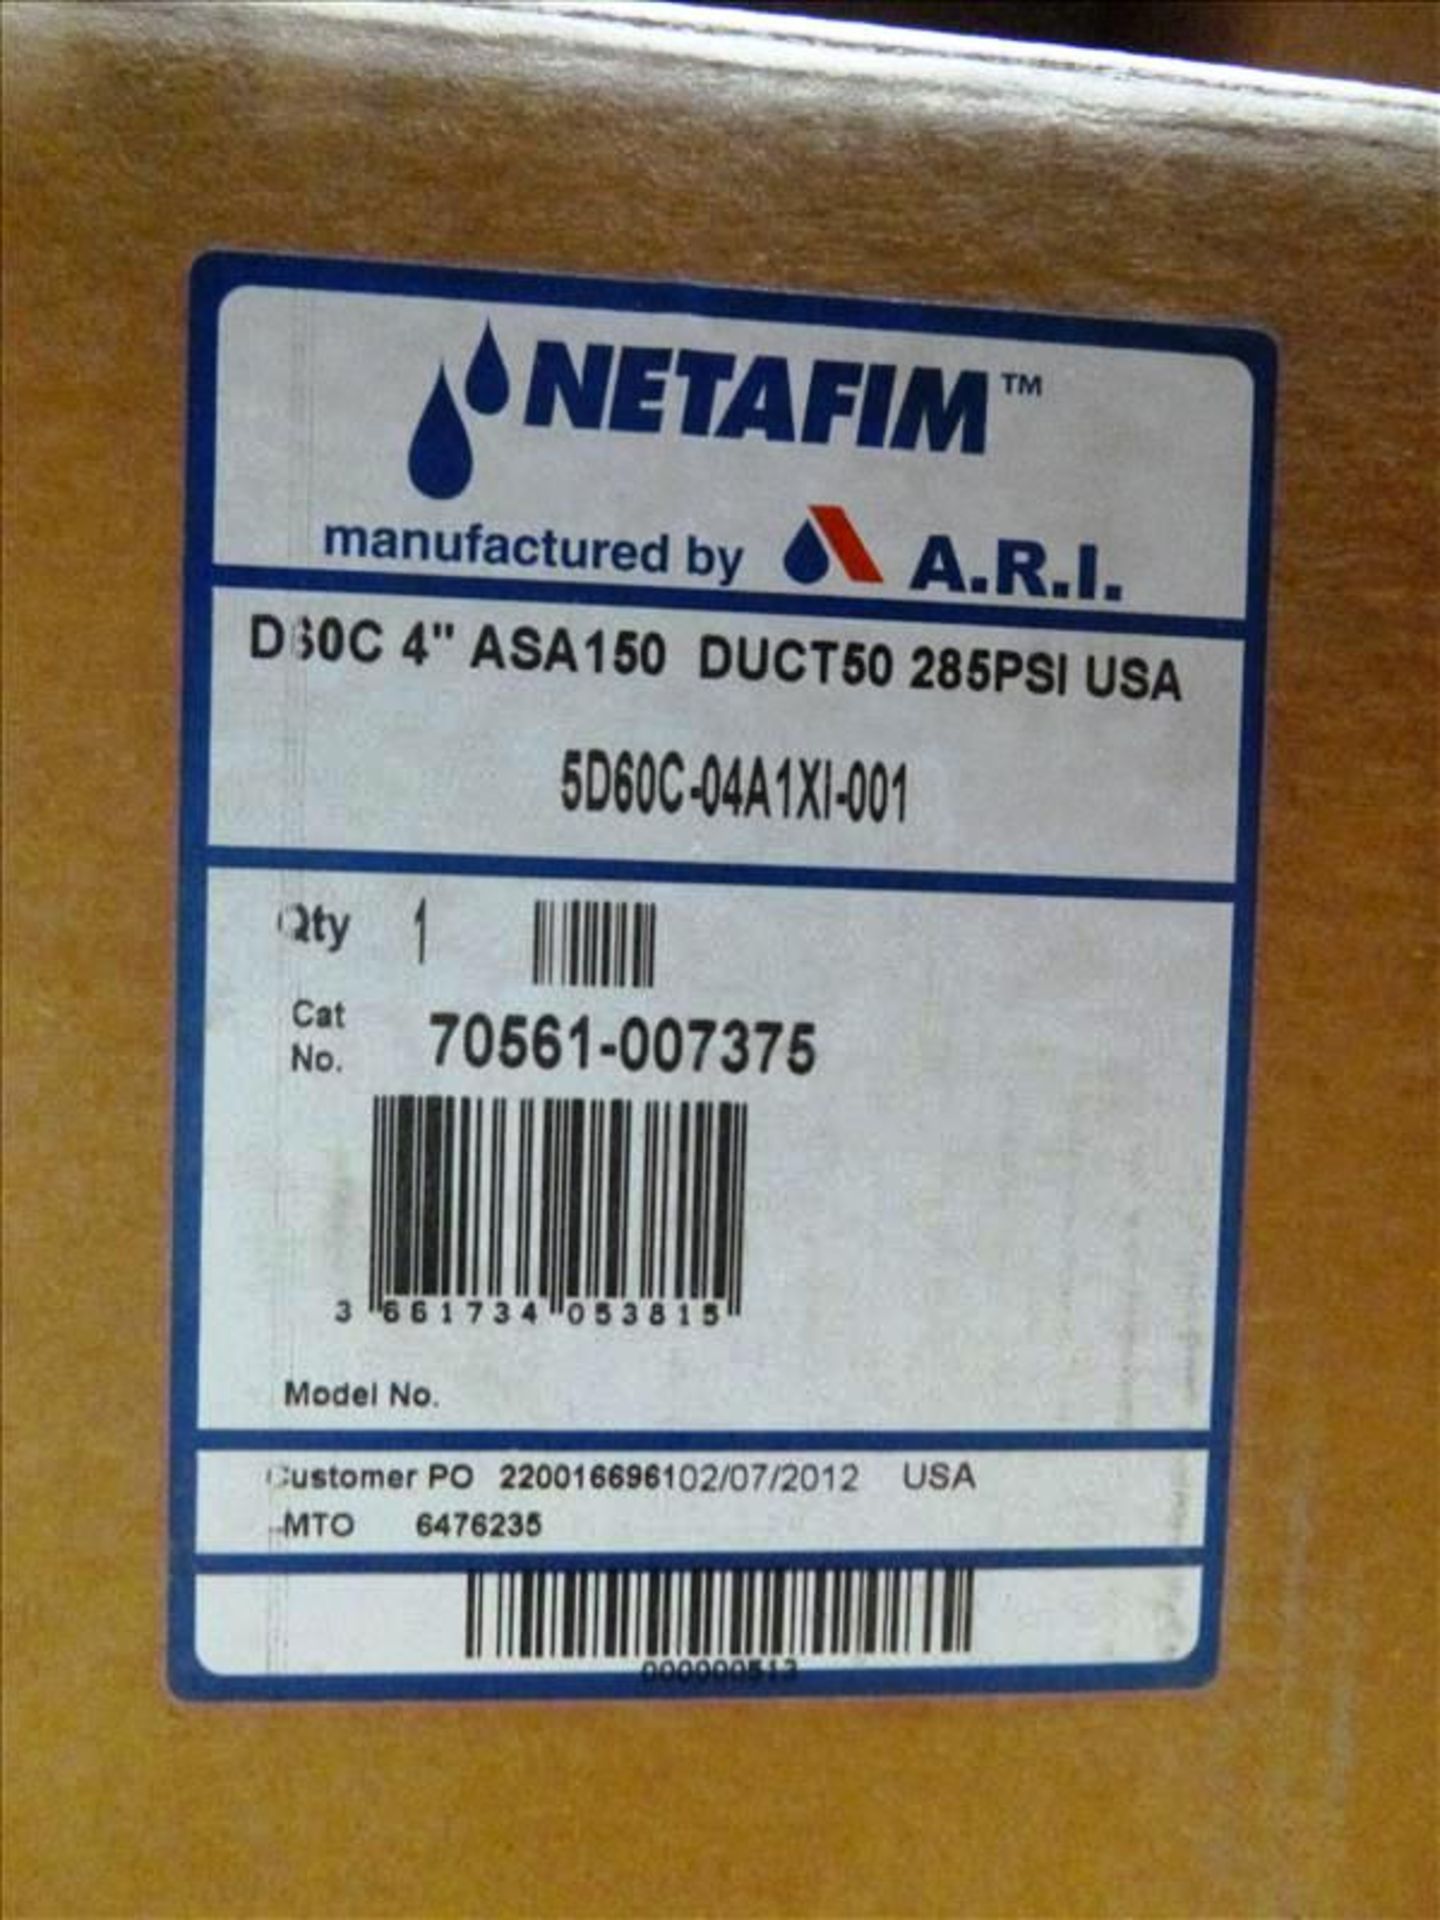 Netafim Steel Air Valve, D60C 4" ASA150 DUCT50 285PSI (CRT 12) - Image 2 of 2